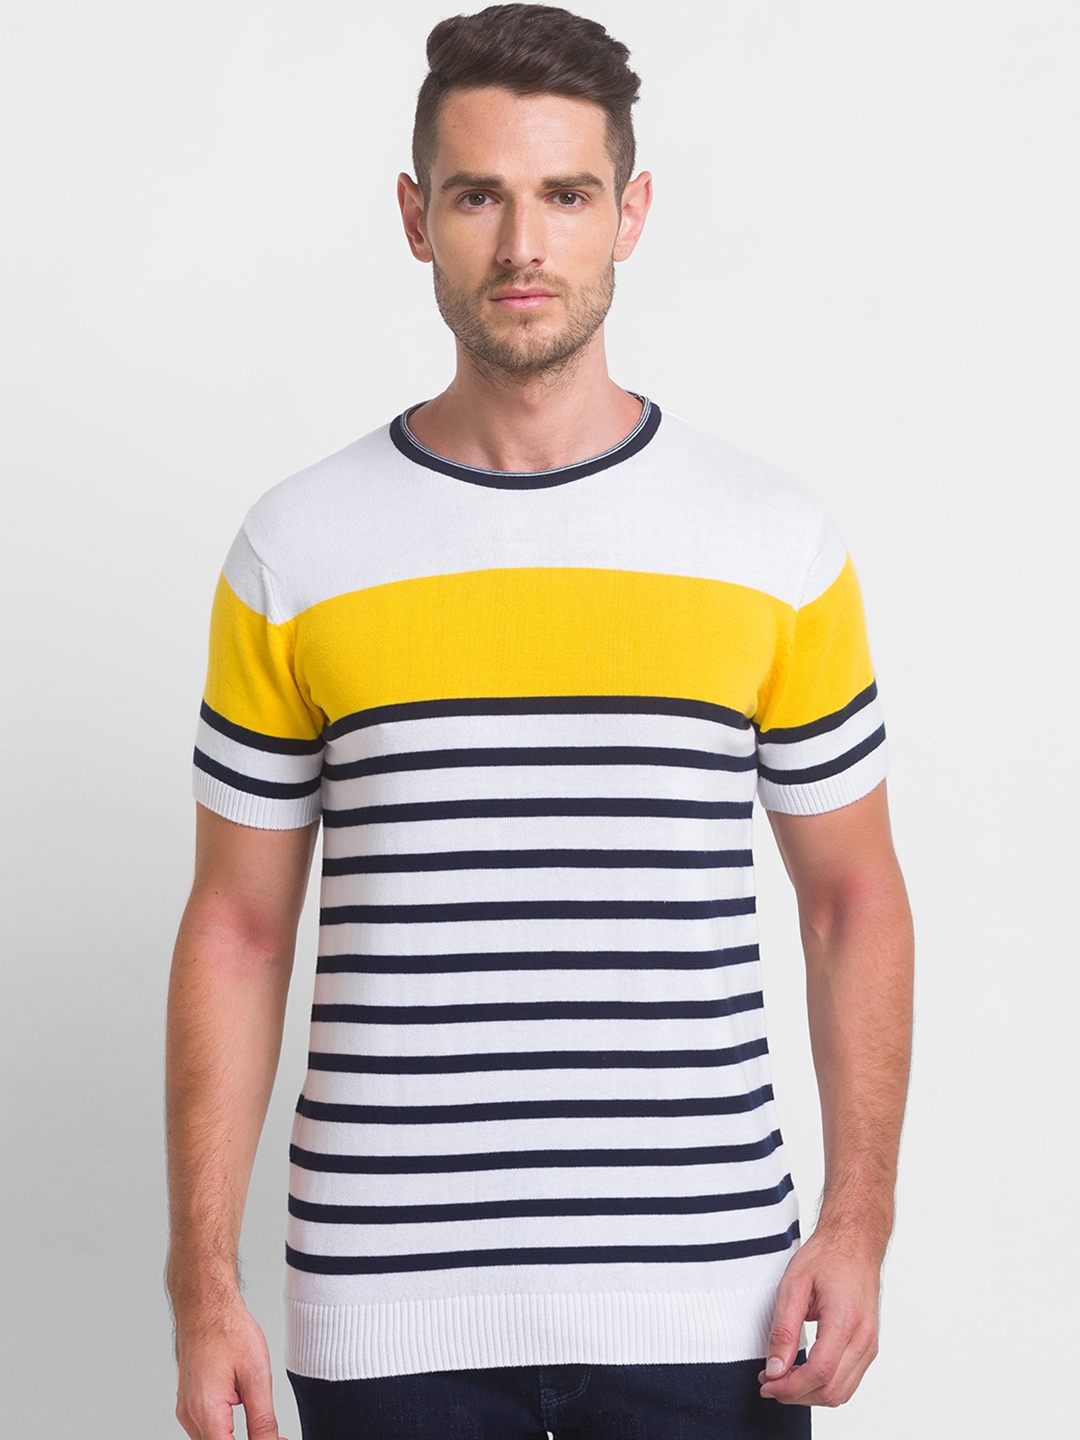 globus | Globus Mustard Striped Tshirt